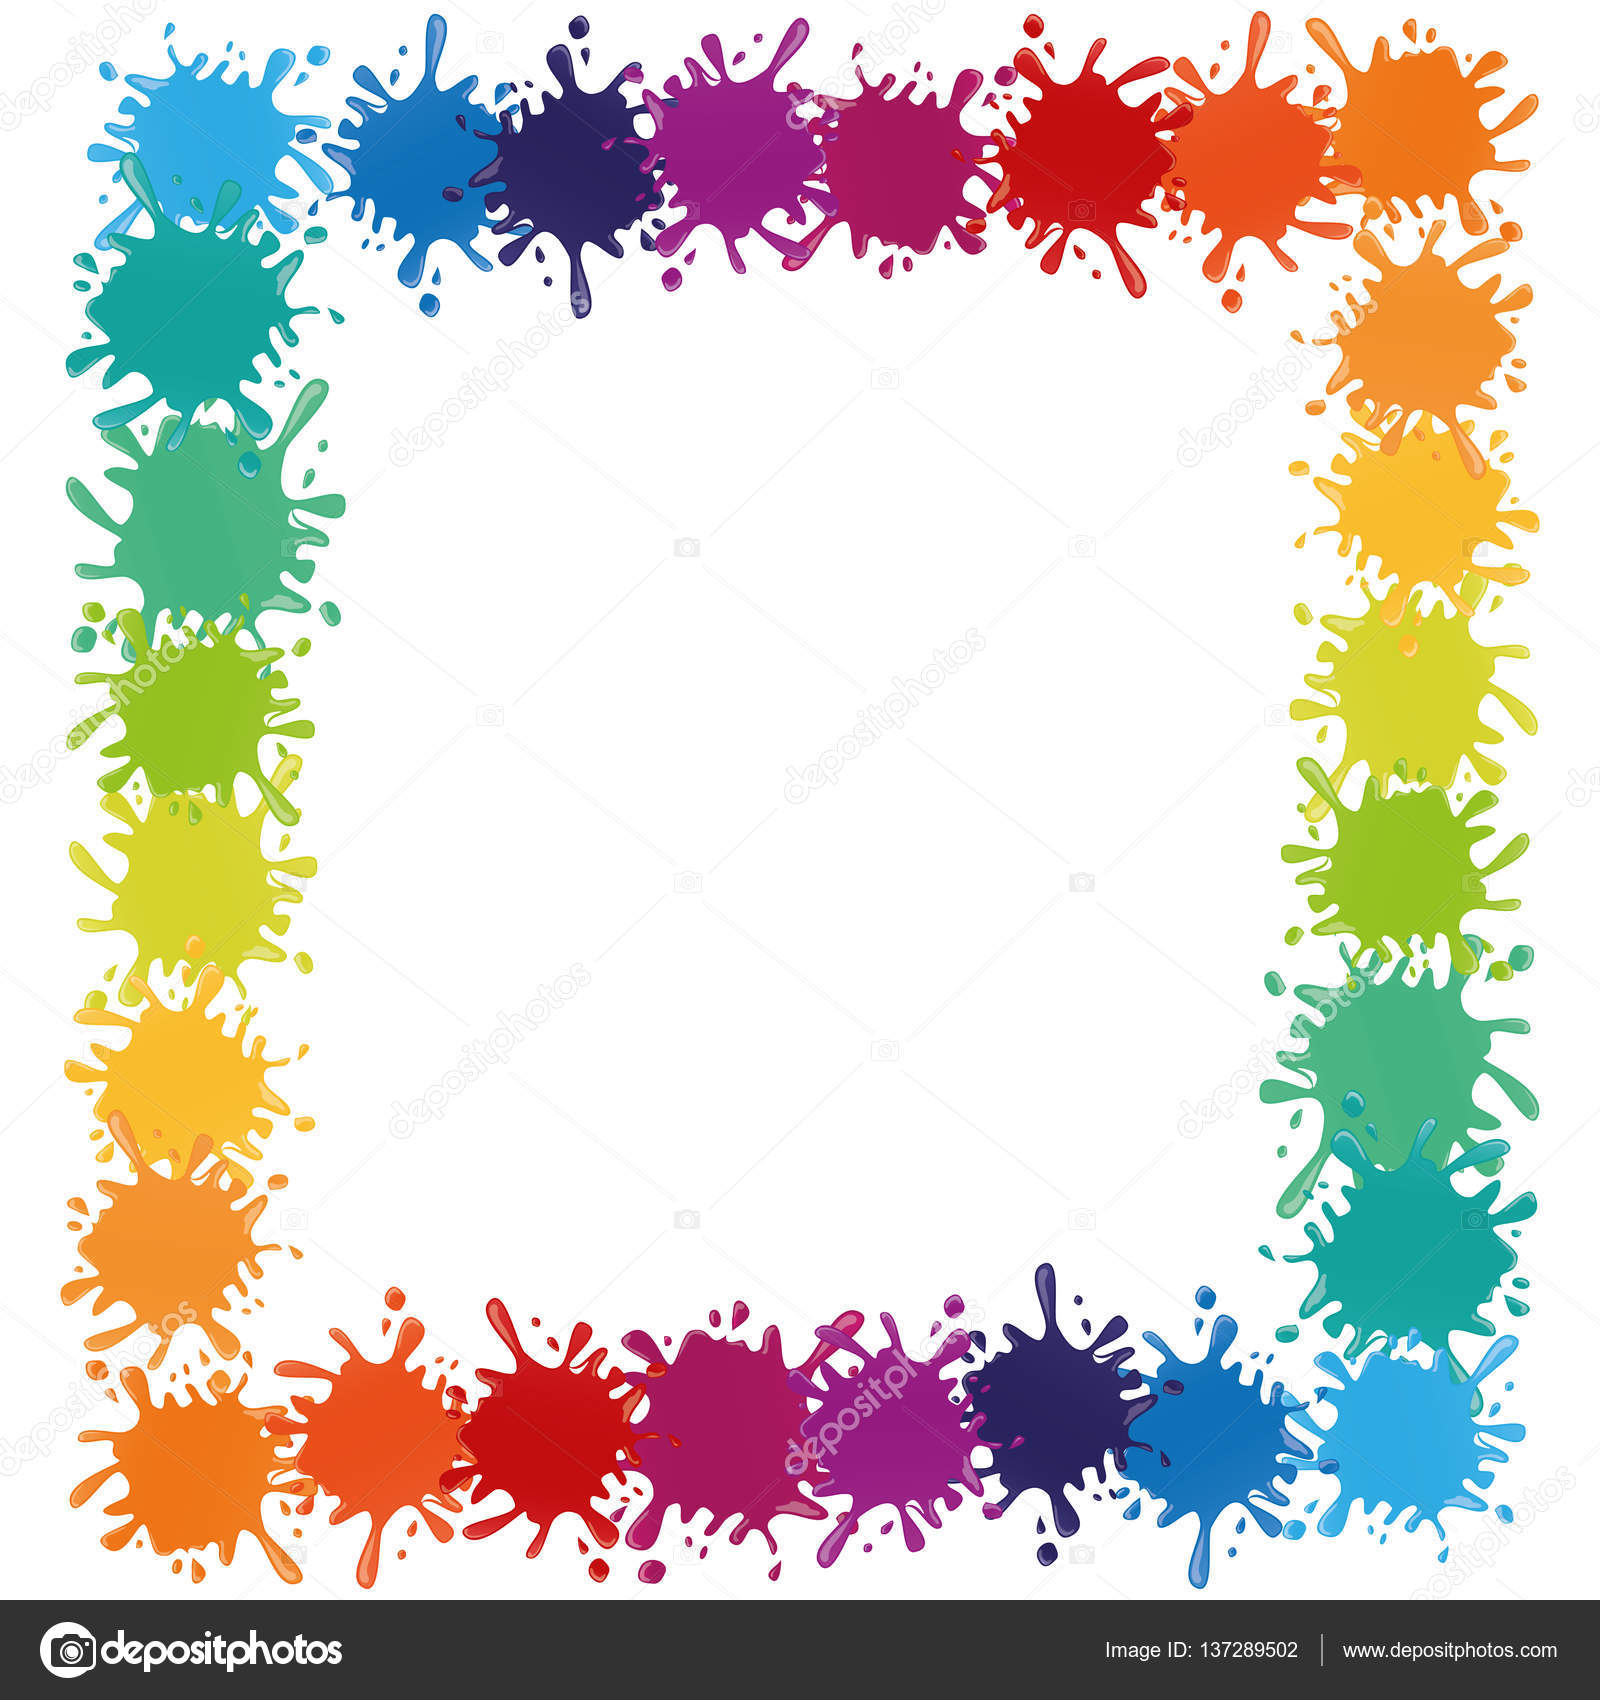 Colorful Paint Splatter Border